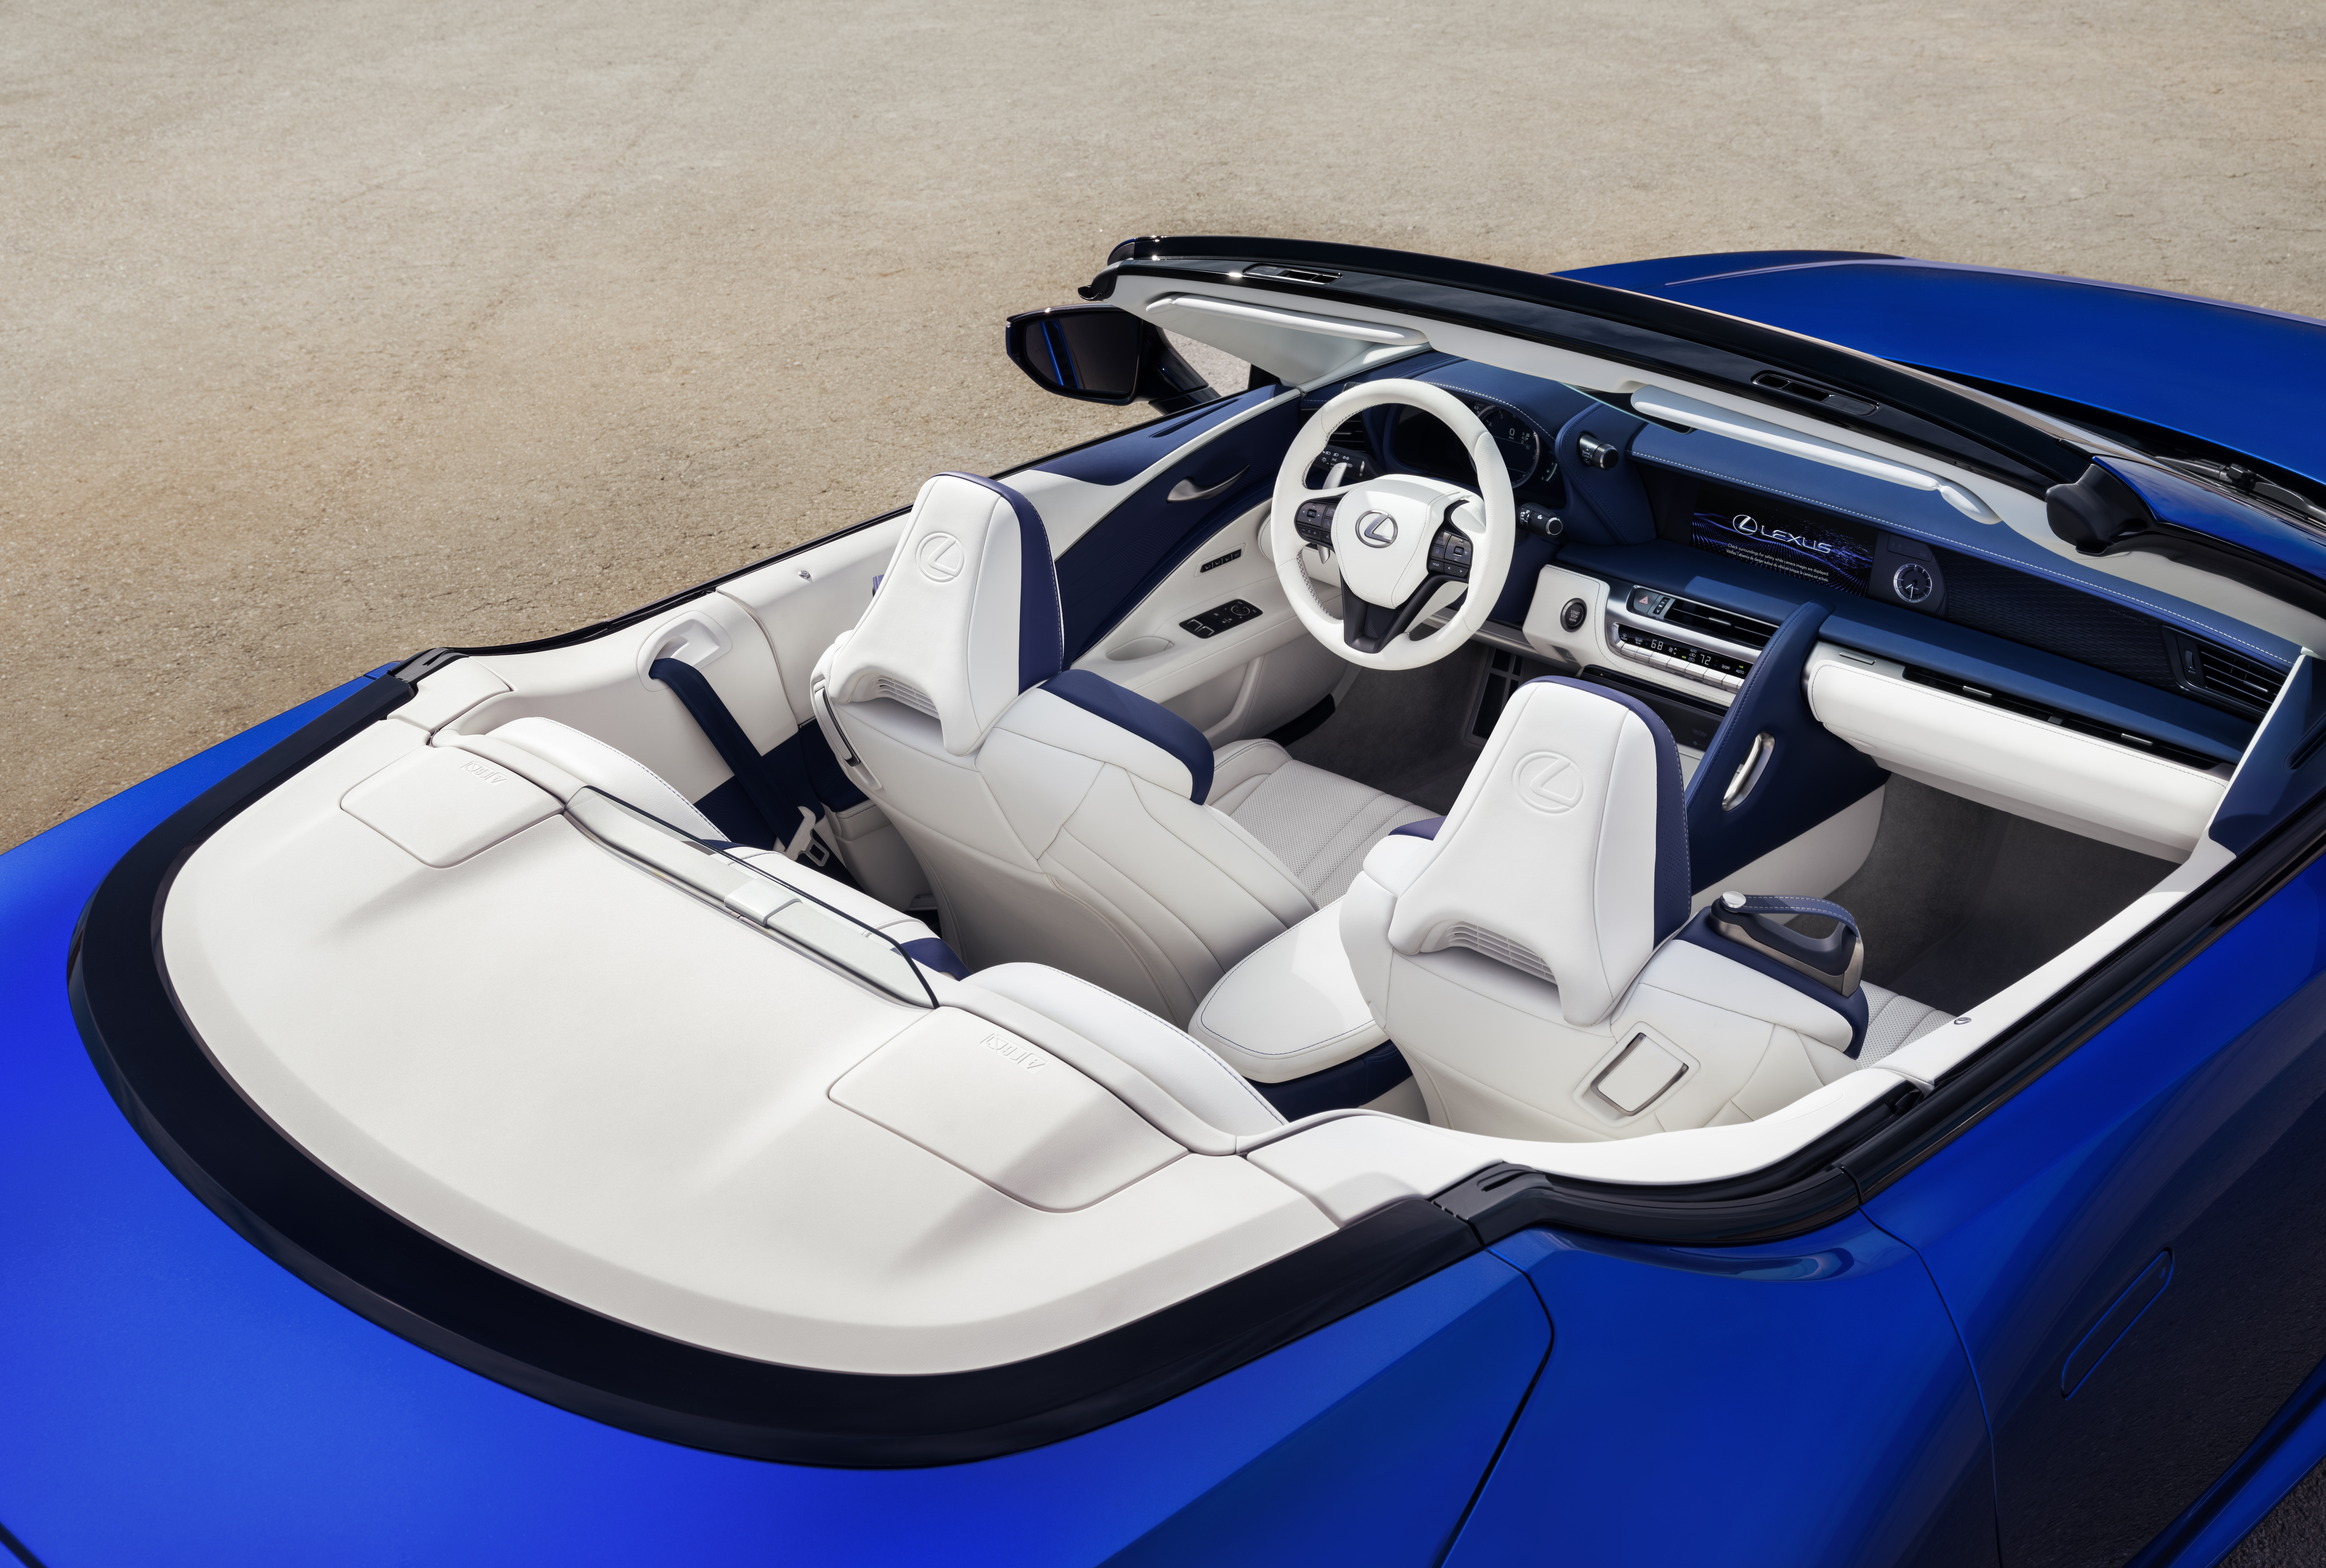 Lexus LC convertible front interior 